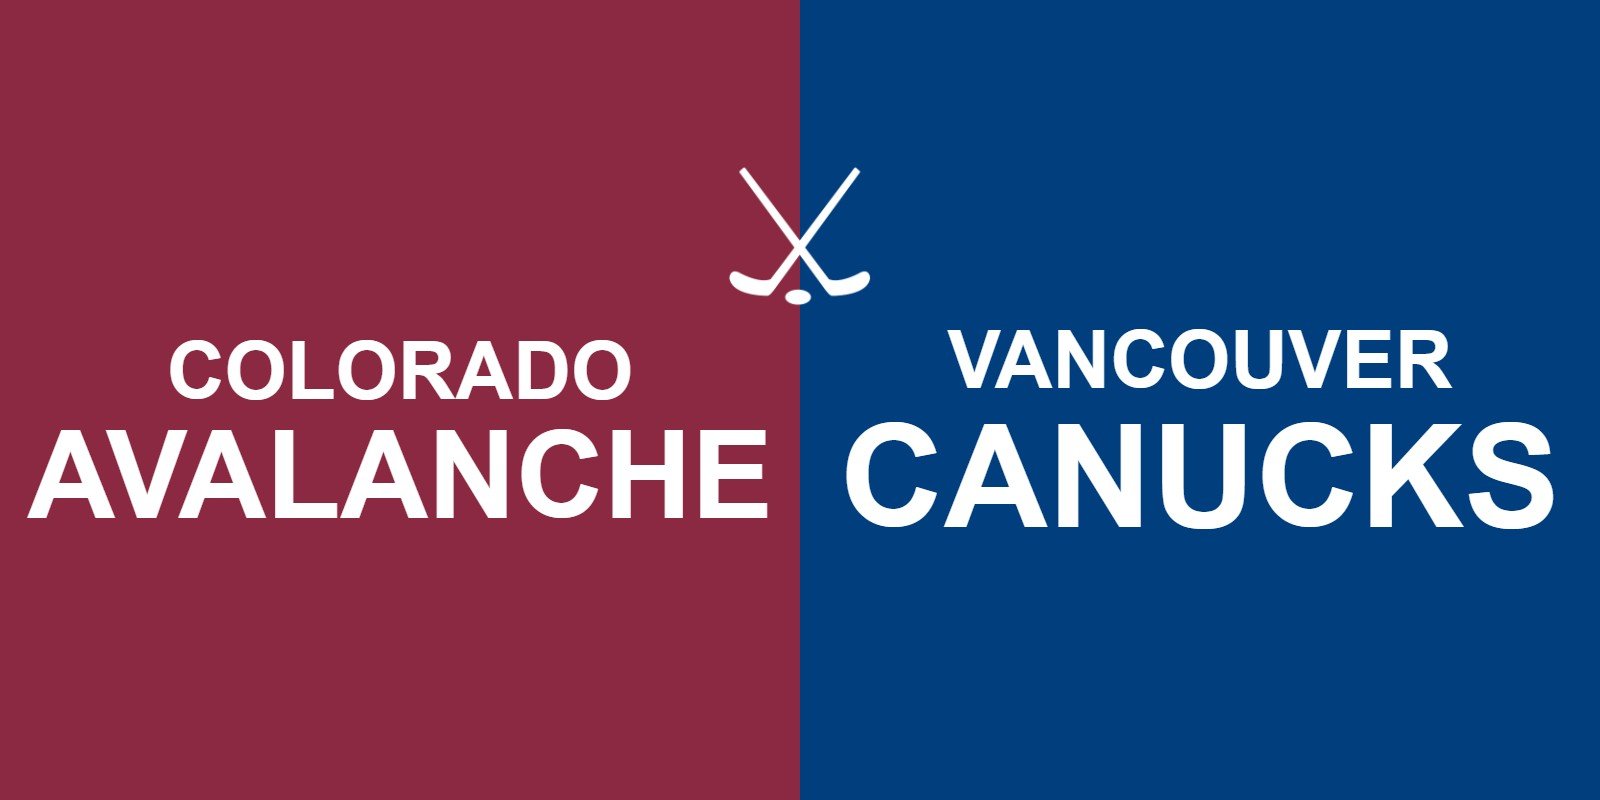 Avalanche vs Canucks